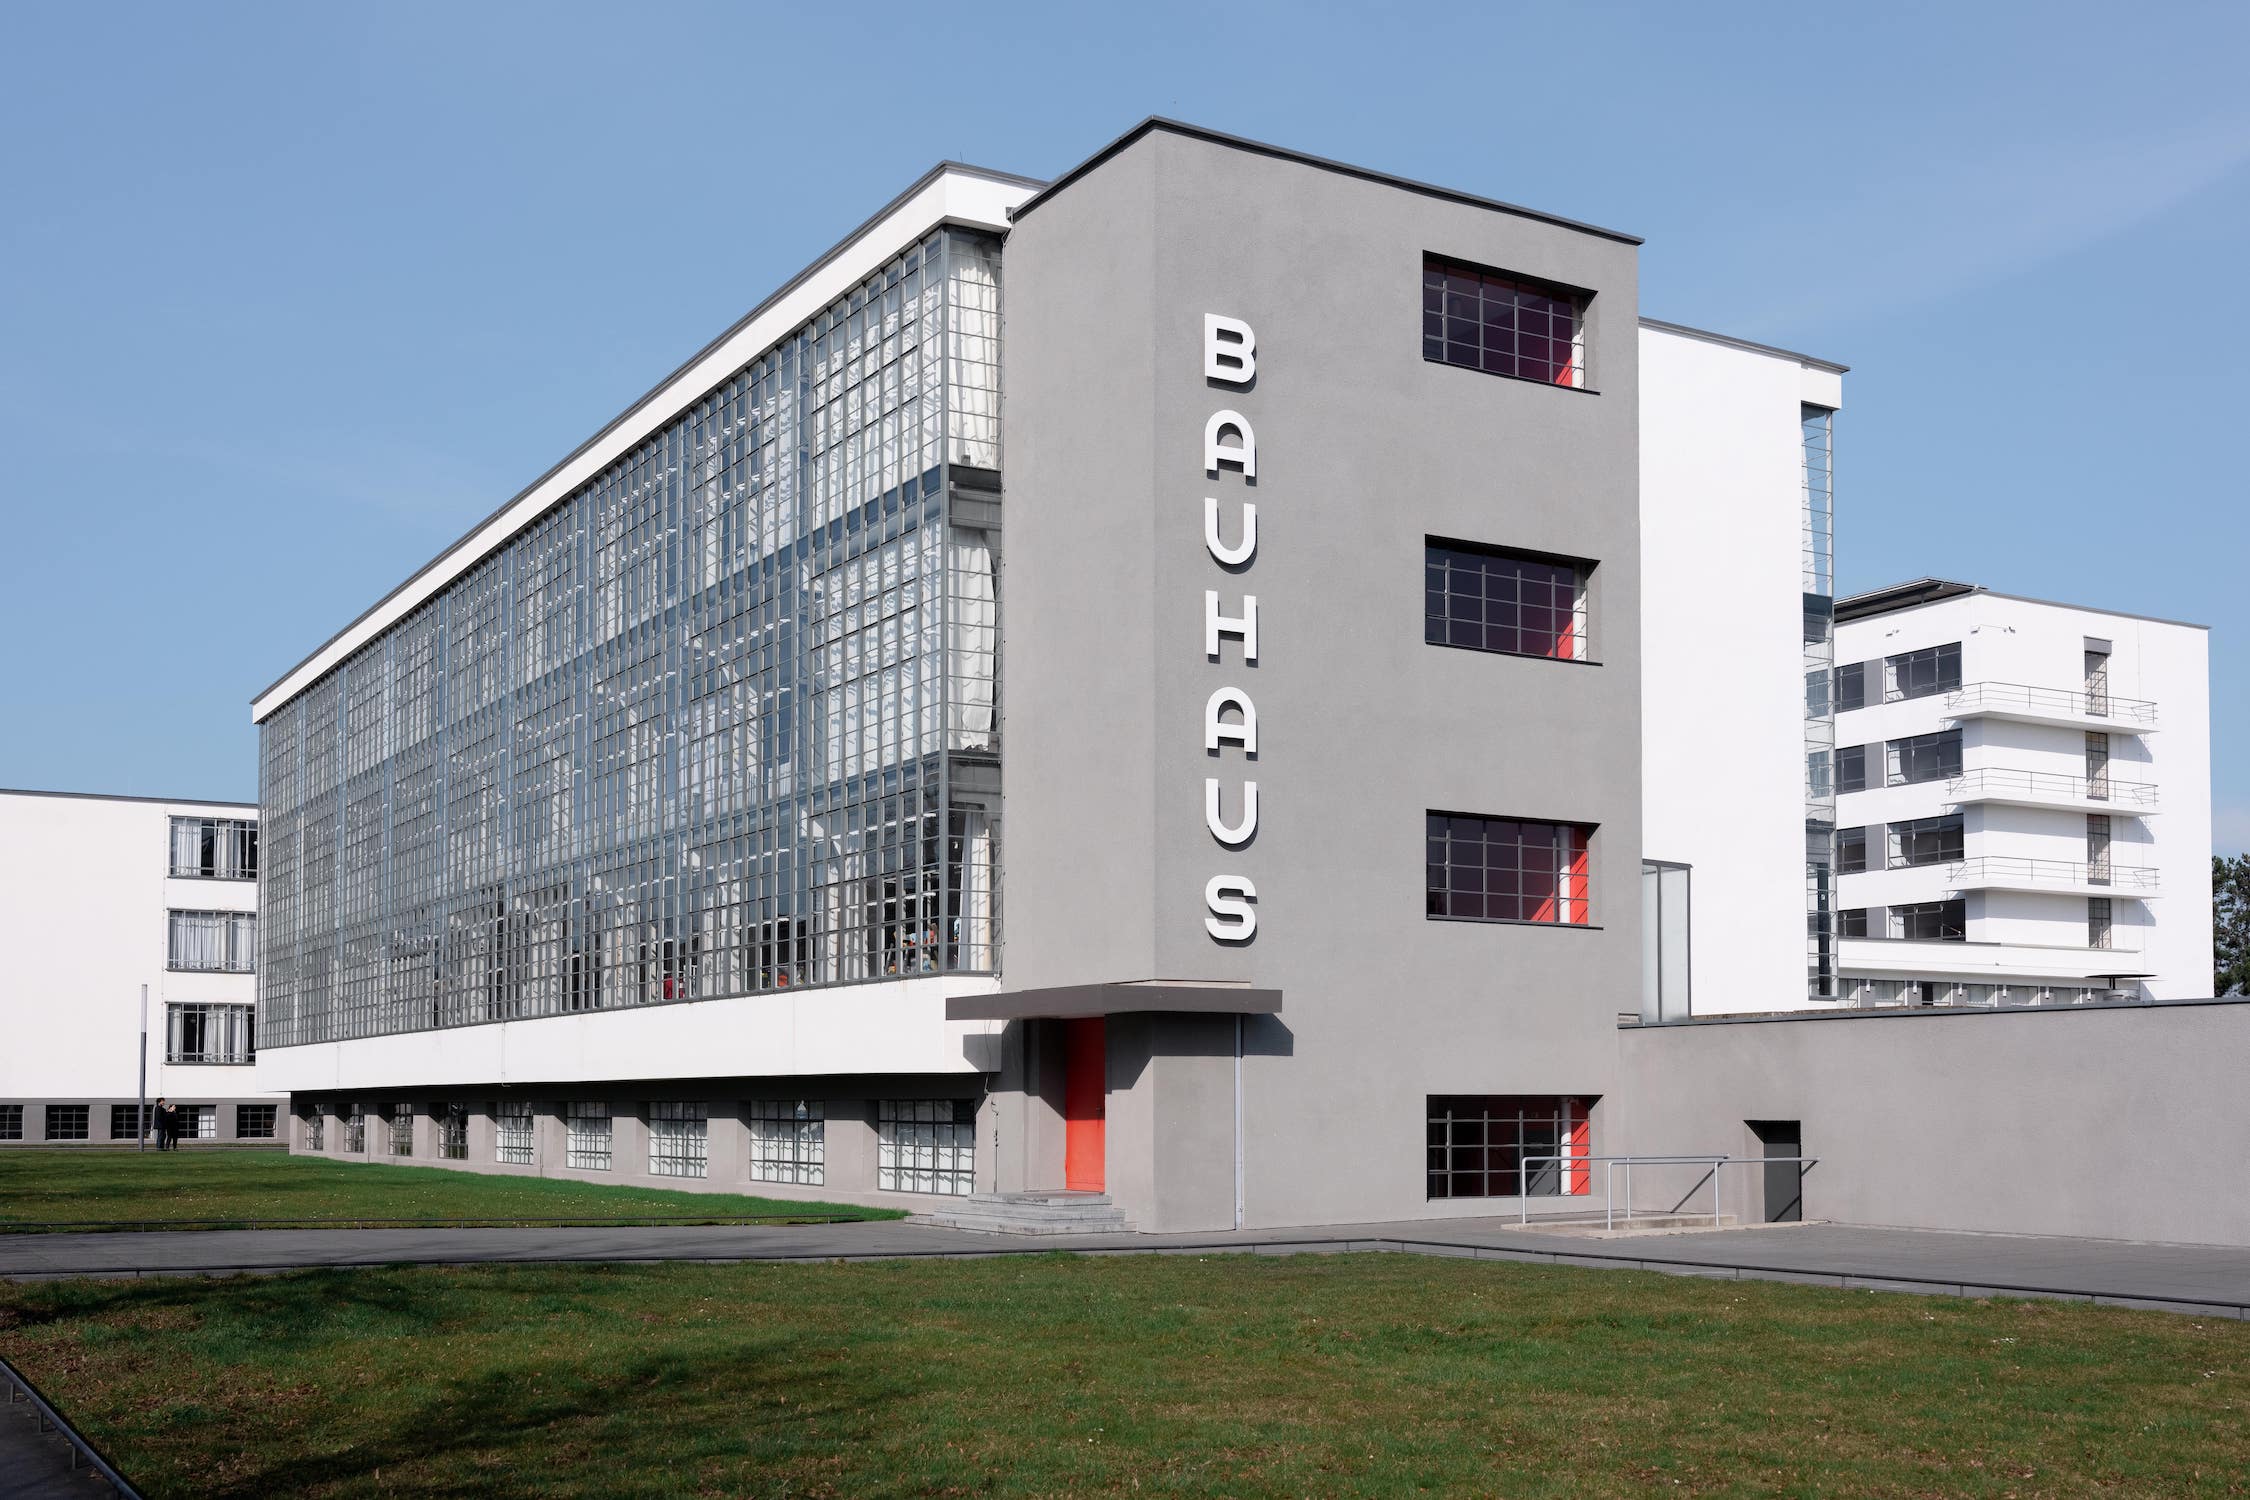 Bauhaus Building in Dessau, Germany